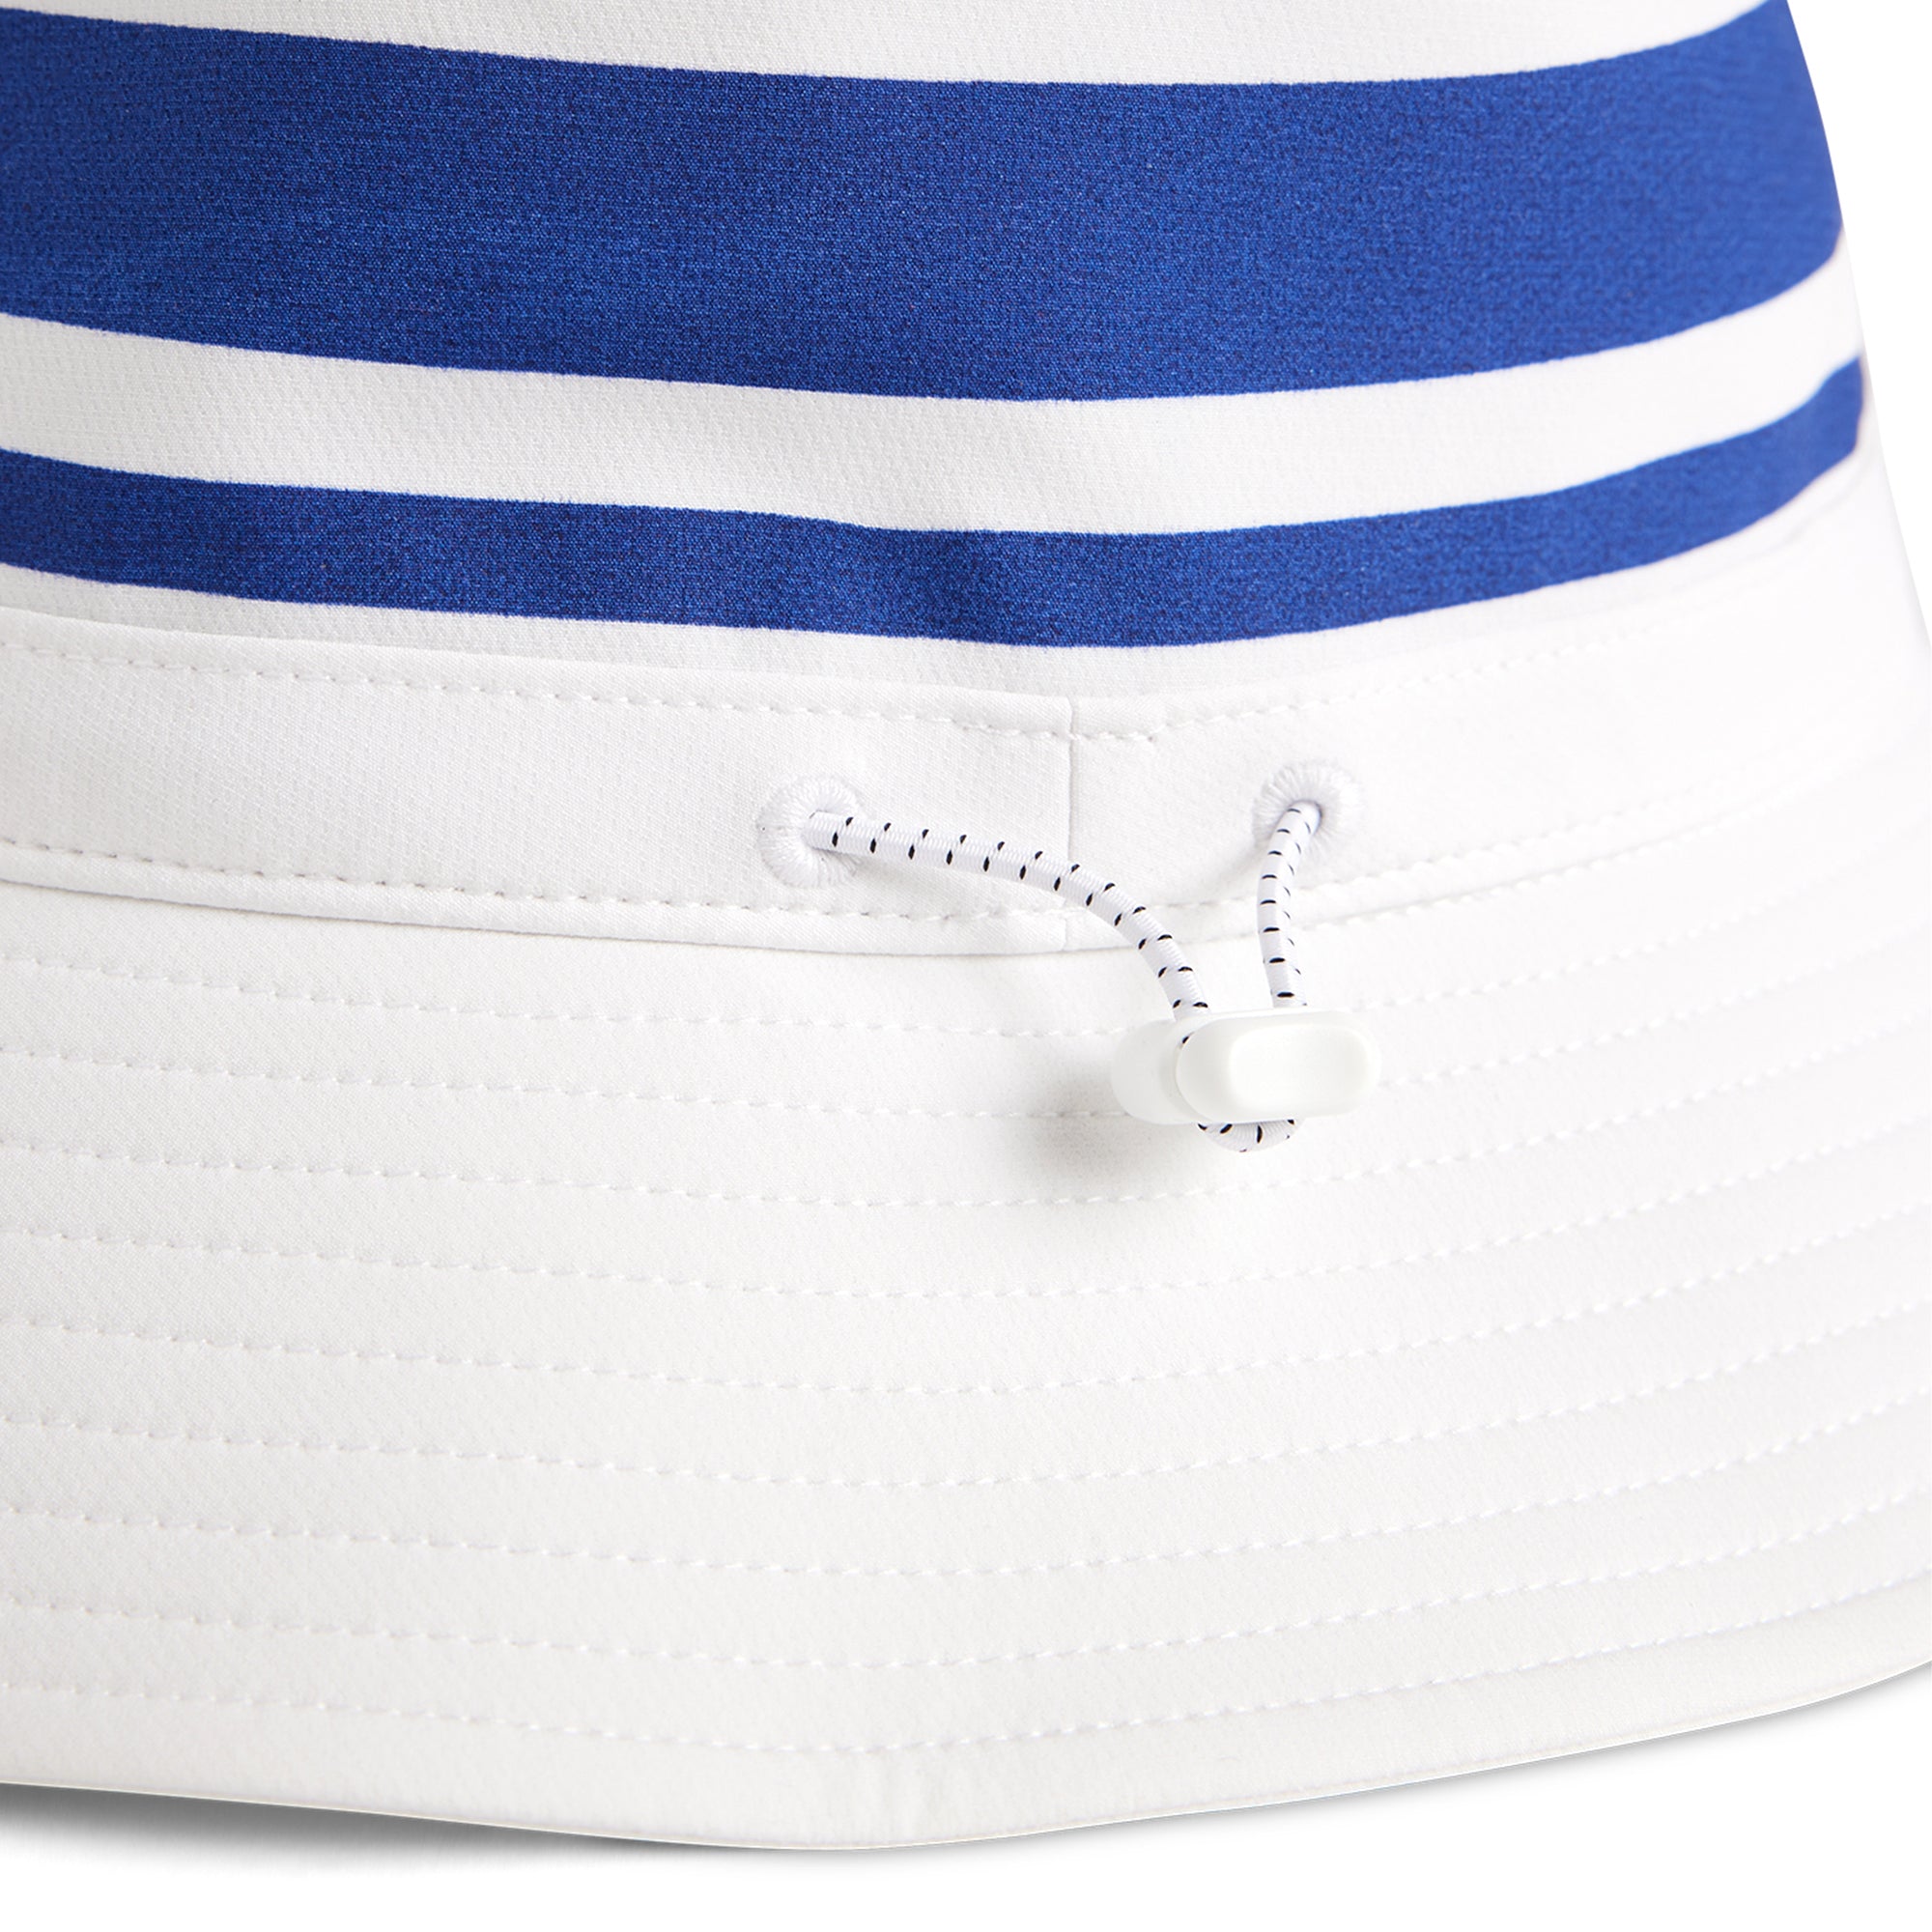 j-lindeberg-golf-deacon-bucket-hat-gmac10016-0000-white